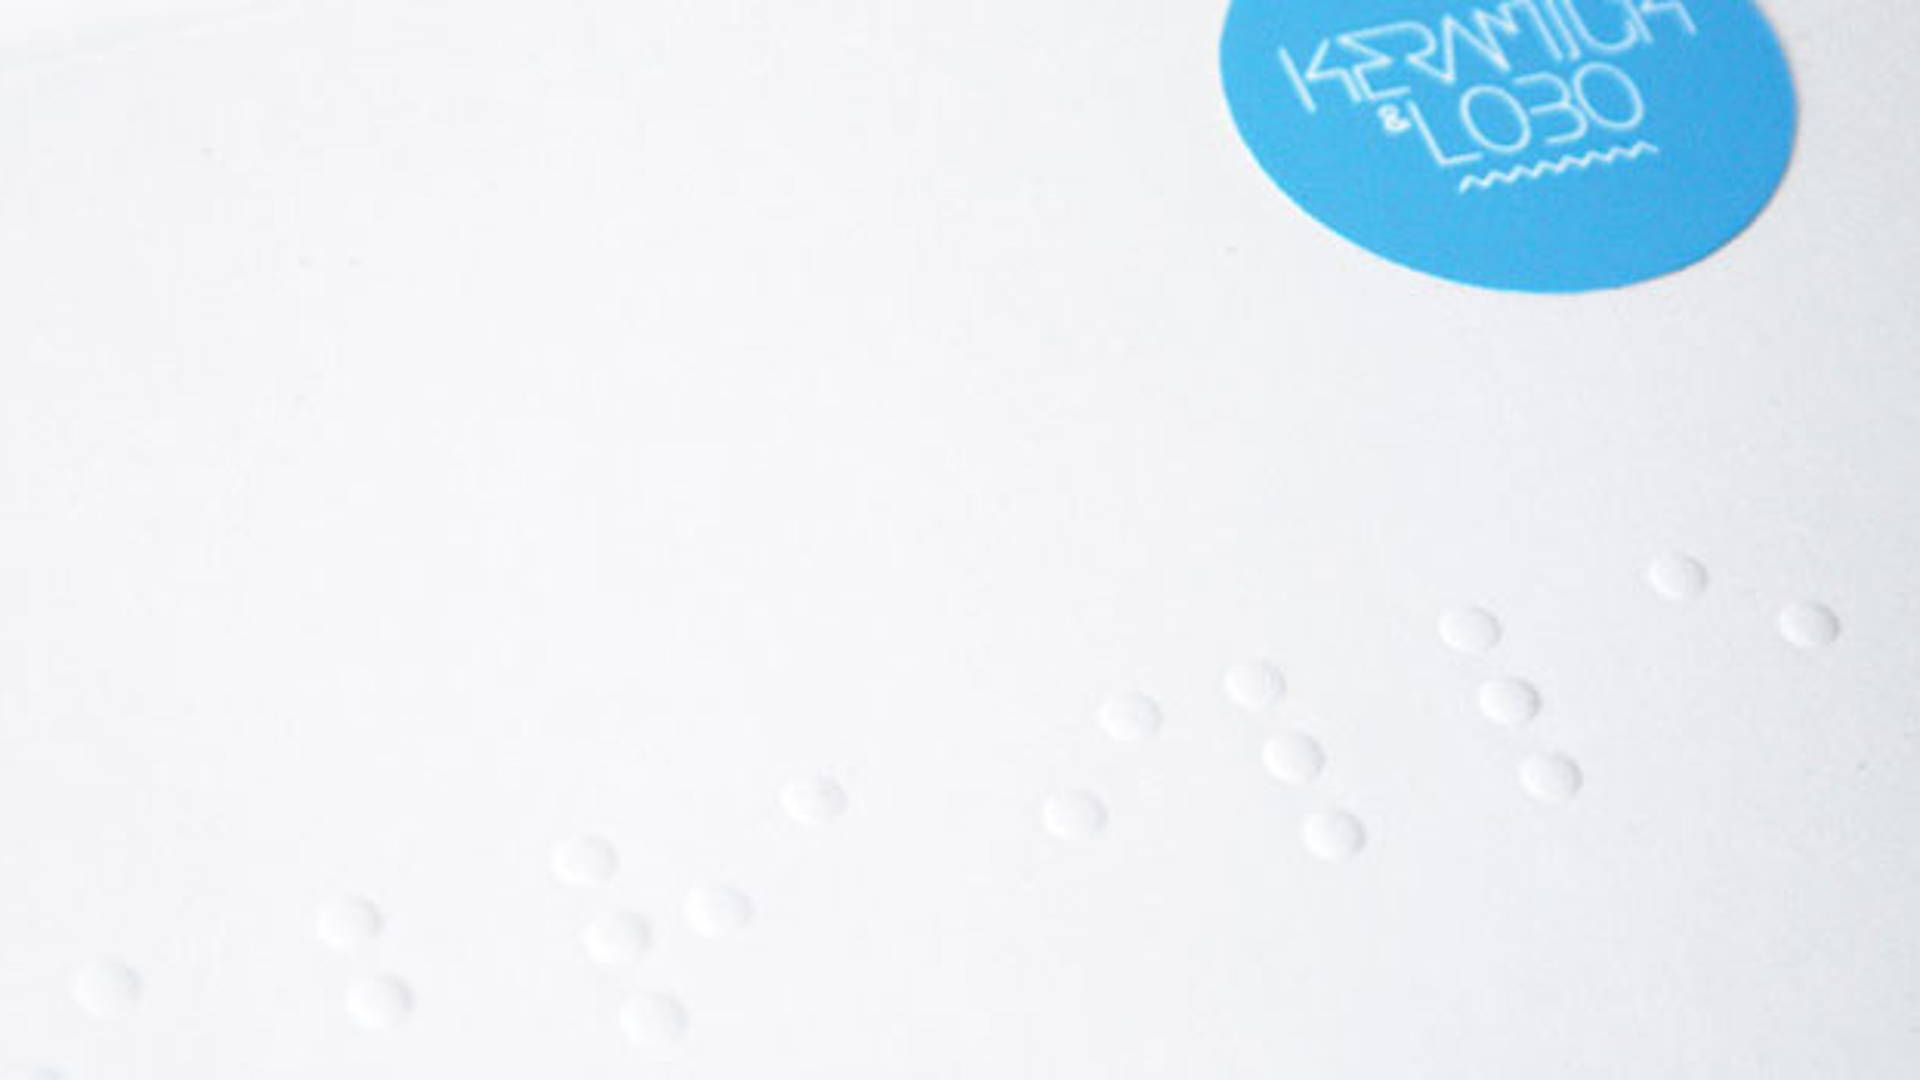 Keramick & Lobo: The Braille CD | Dieline - Design, Branding ...